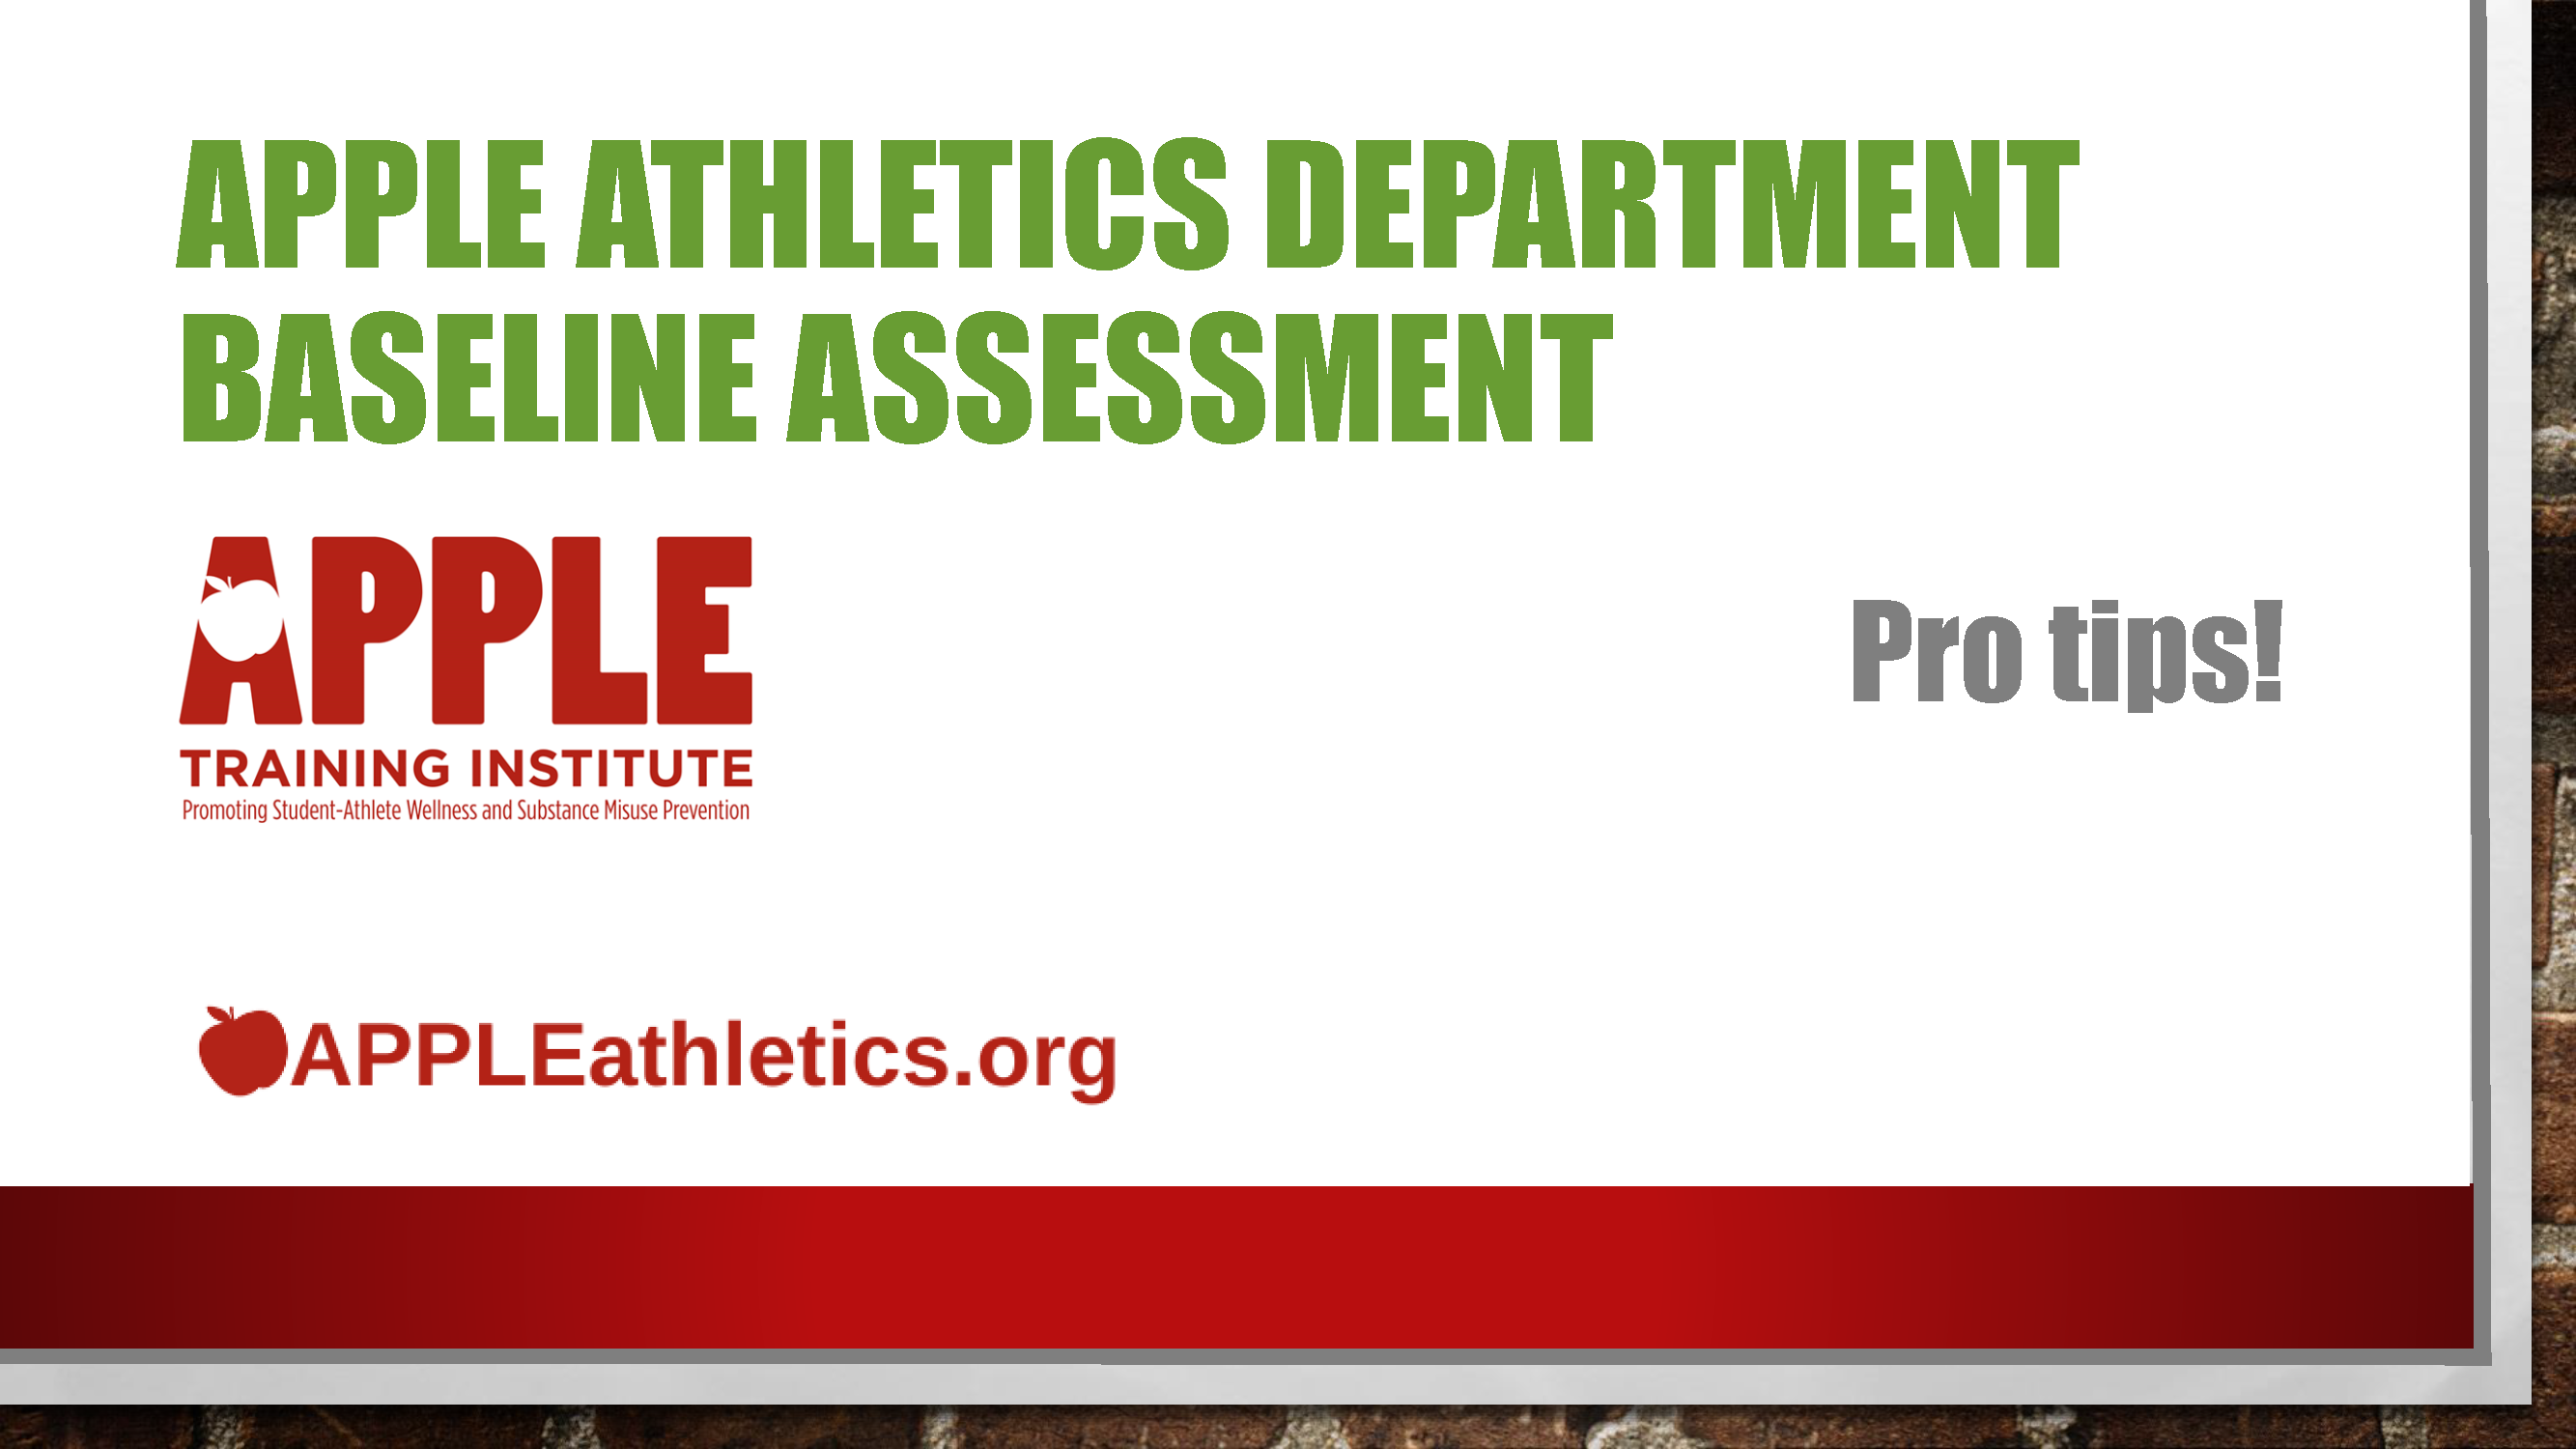 APPLE Athletics Department Baseline Assessment presentation cover slide